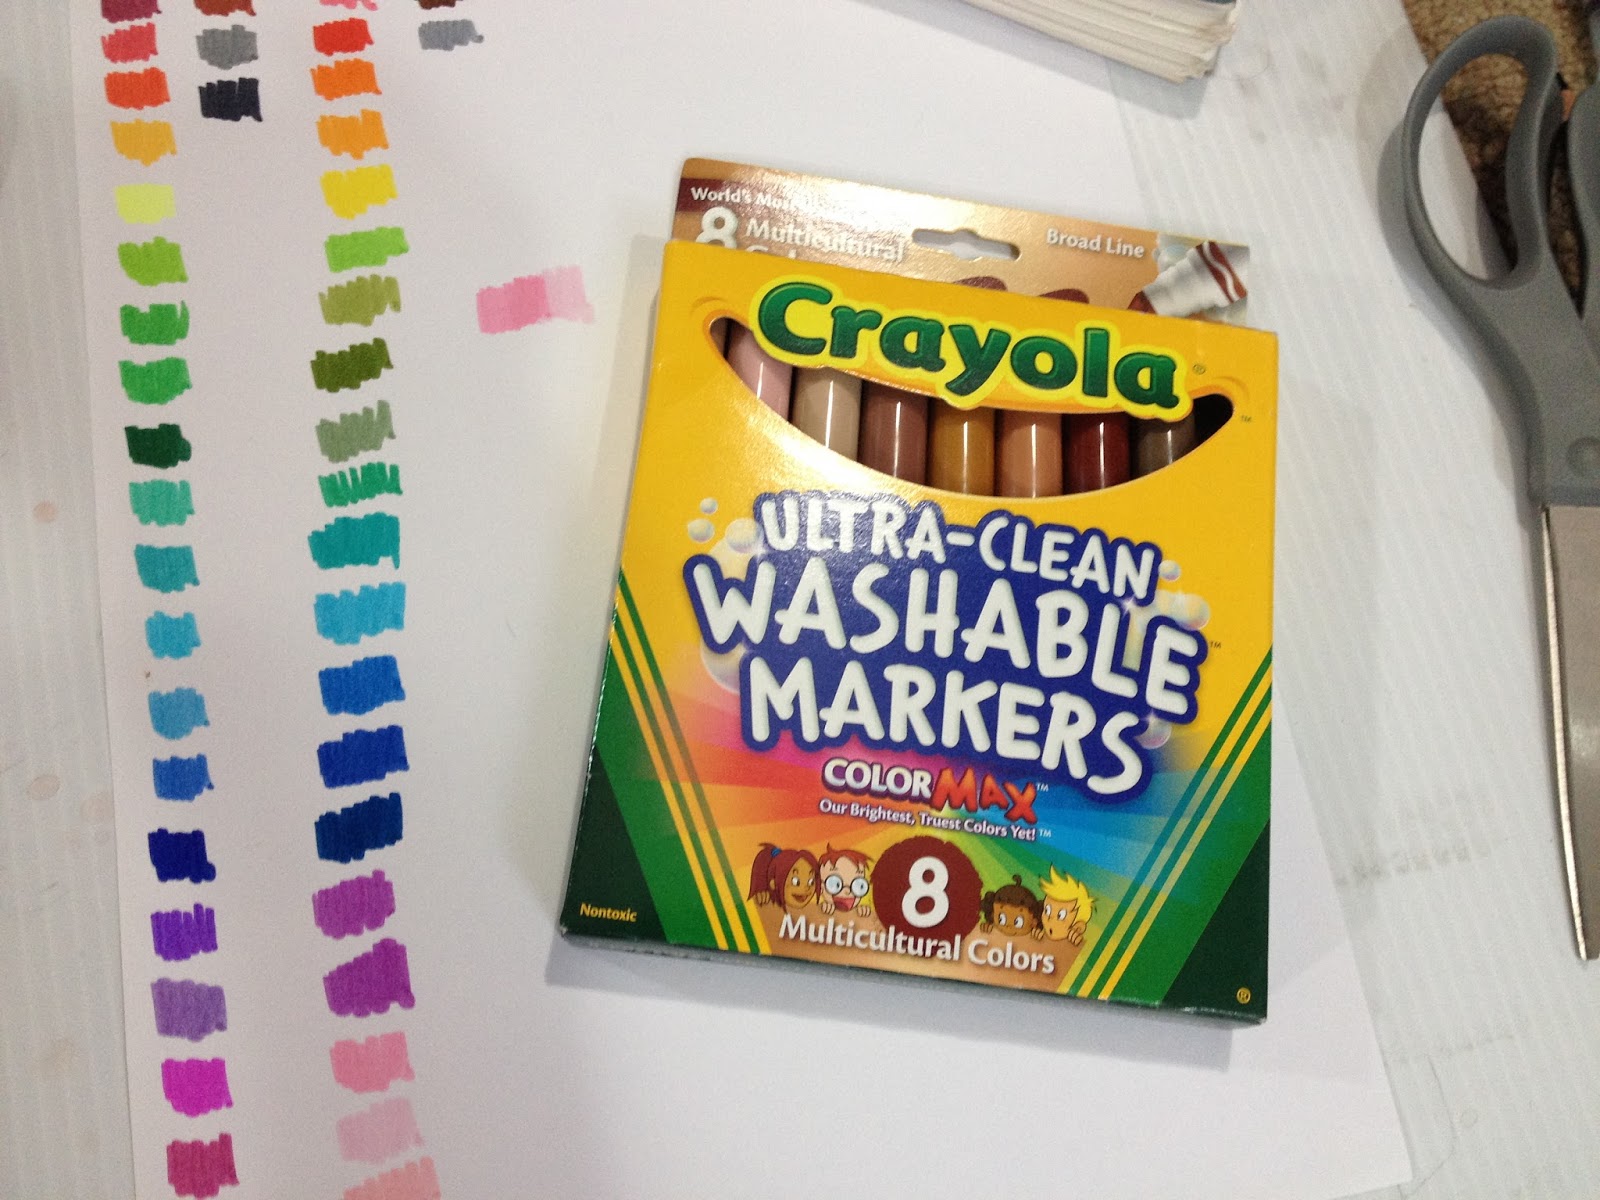 Crayola Construction Paper Pack, Hobby Lobby